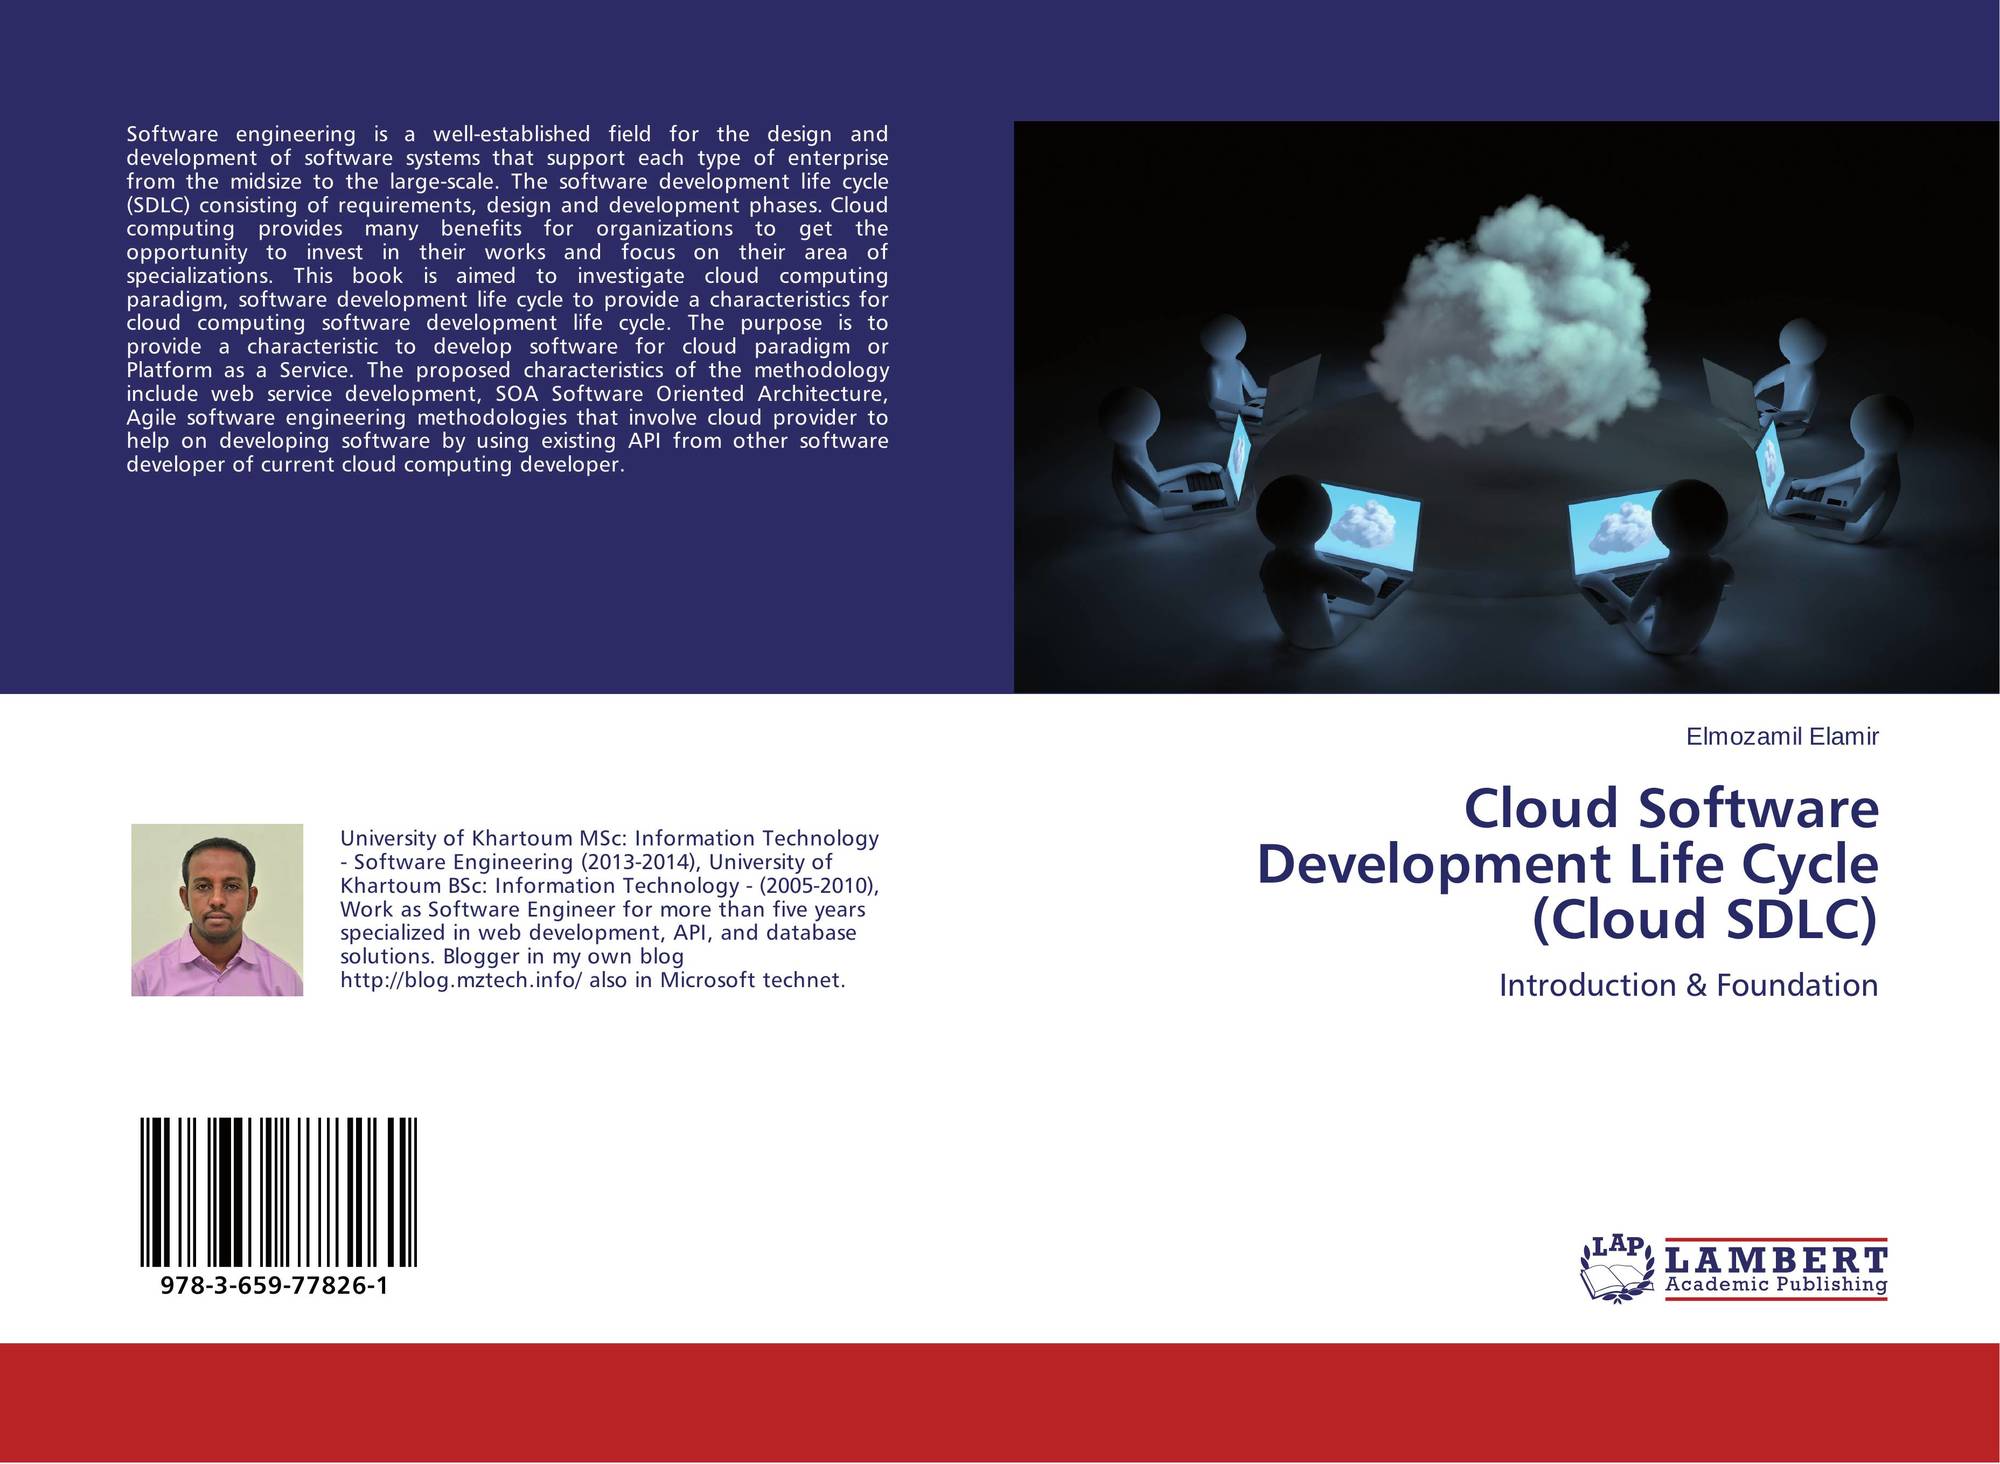 Cloud Software Development Life Cycle (Cloud SDLC), 978-3-659-77826-1